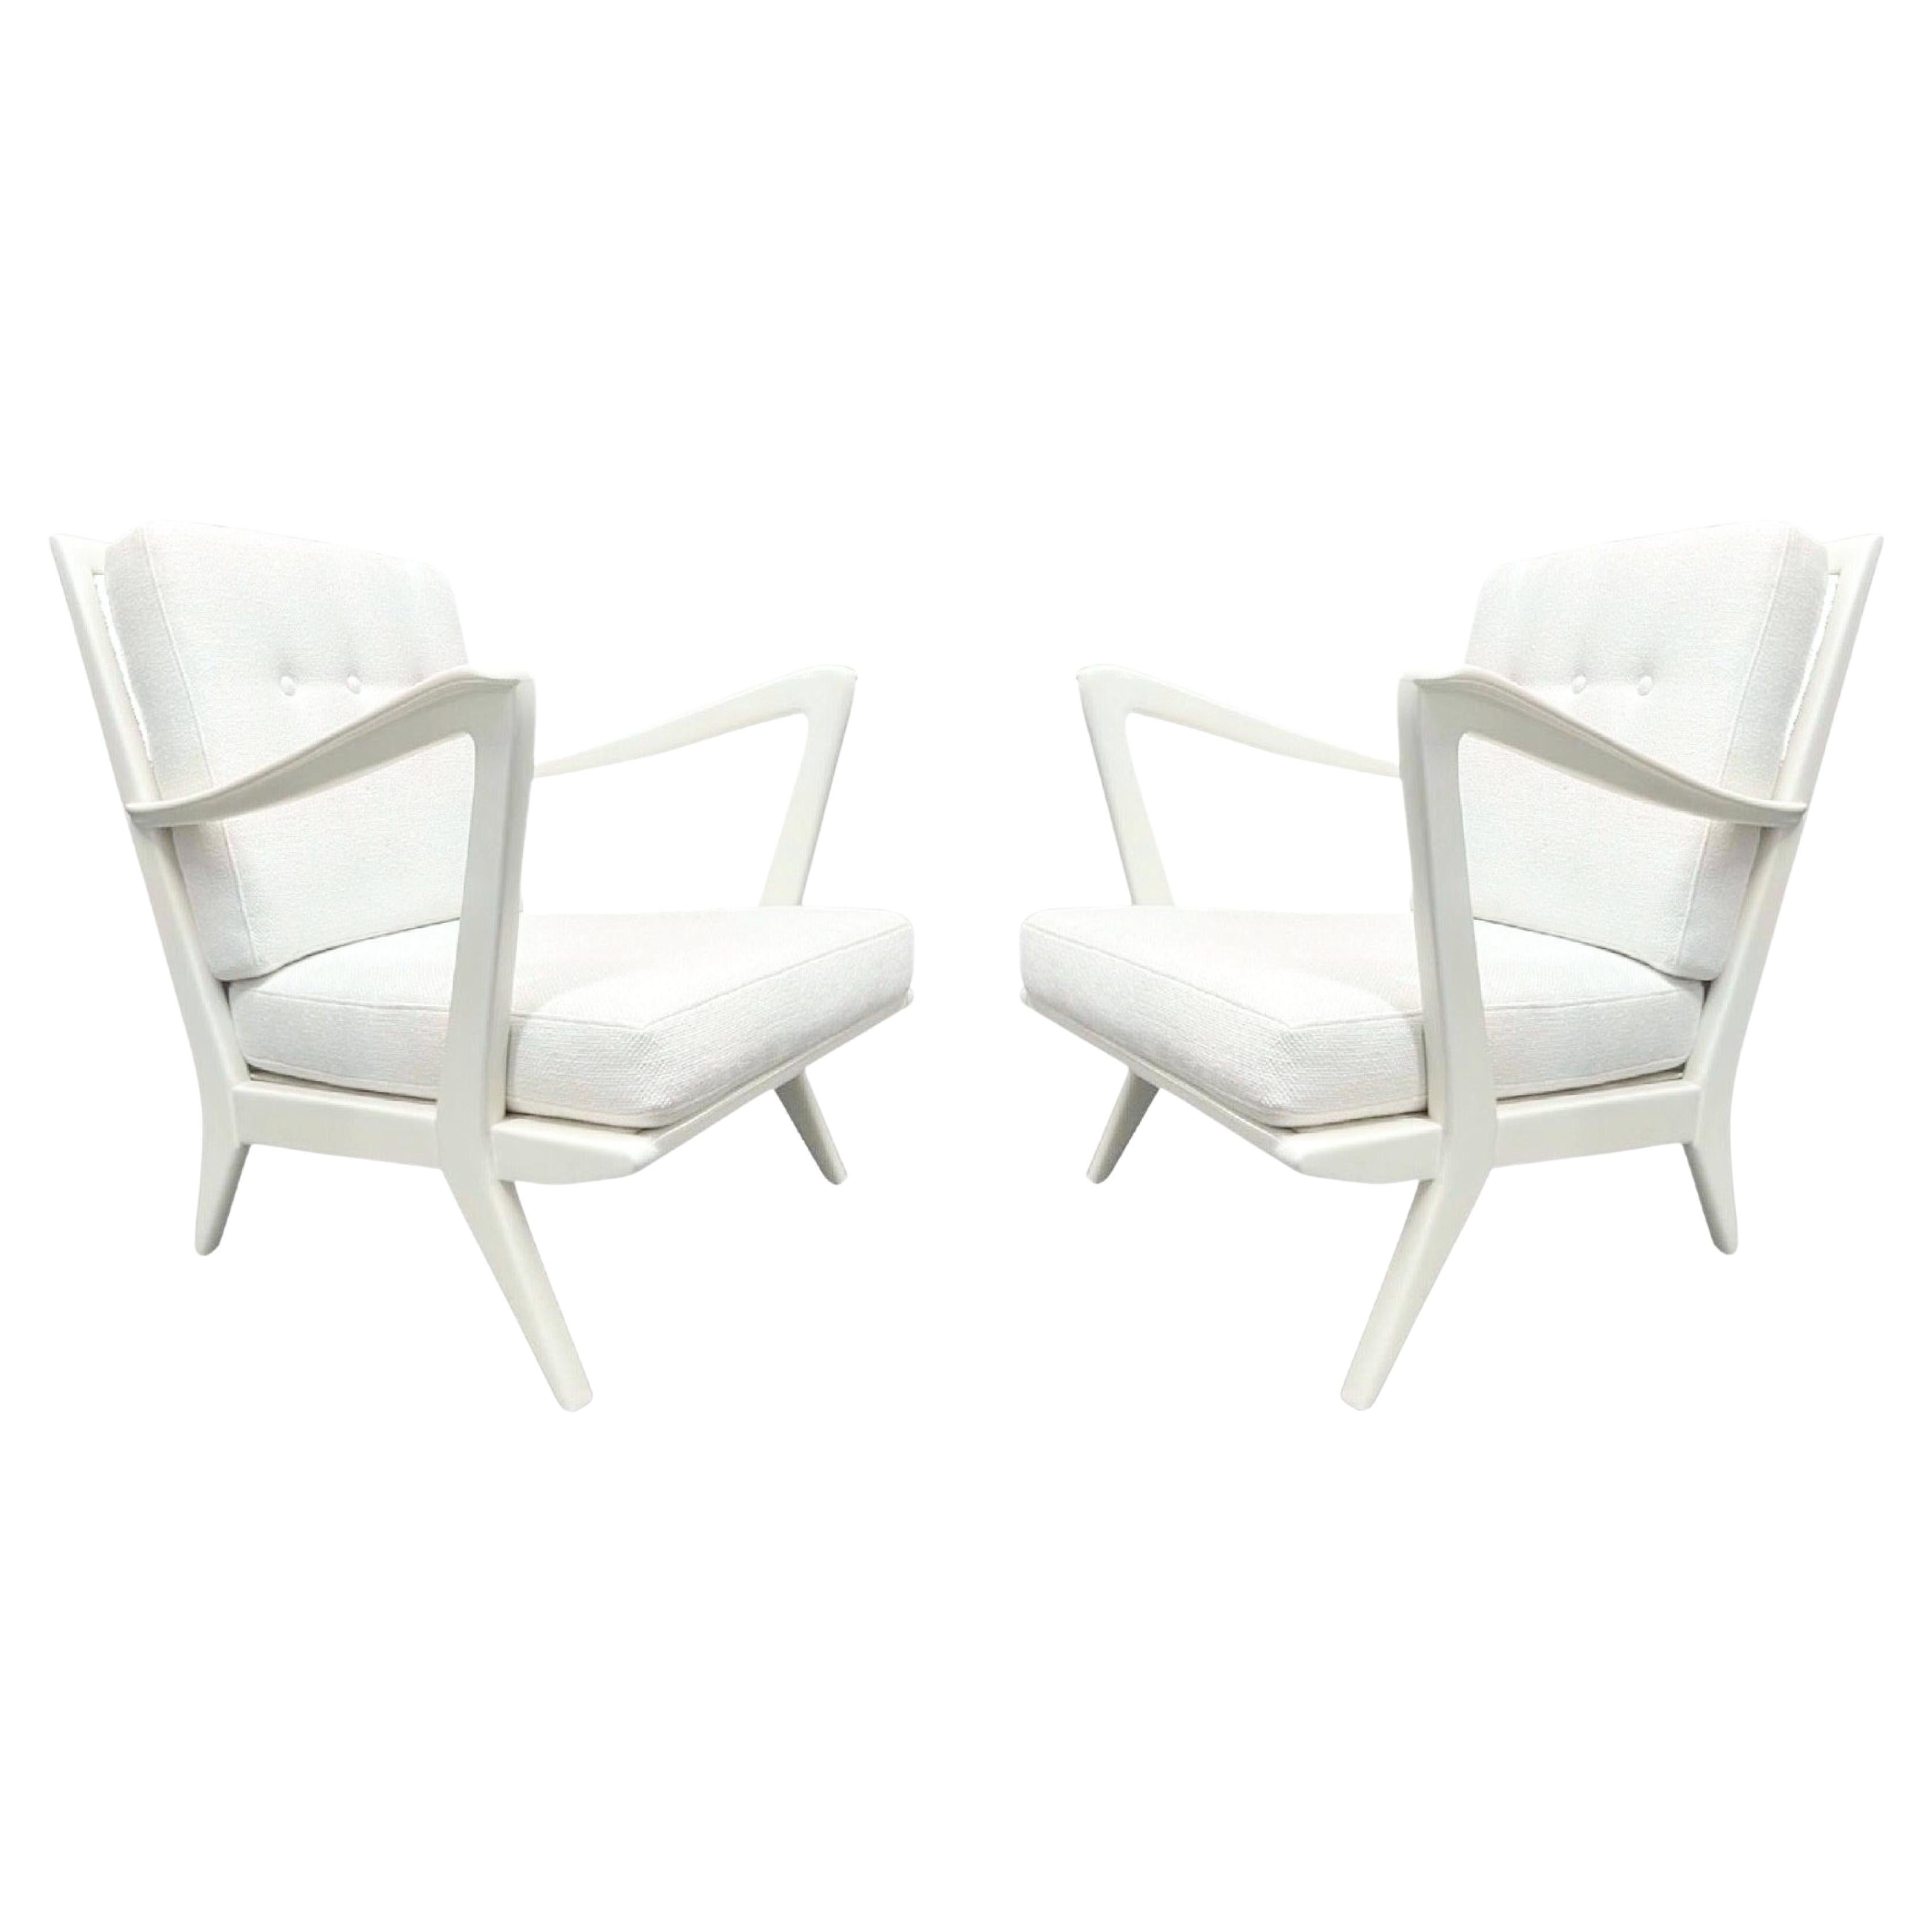 Gio Ponti Model 516 Pair of Lounge Chairs, Cream White Painted Walnut, 1950